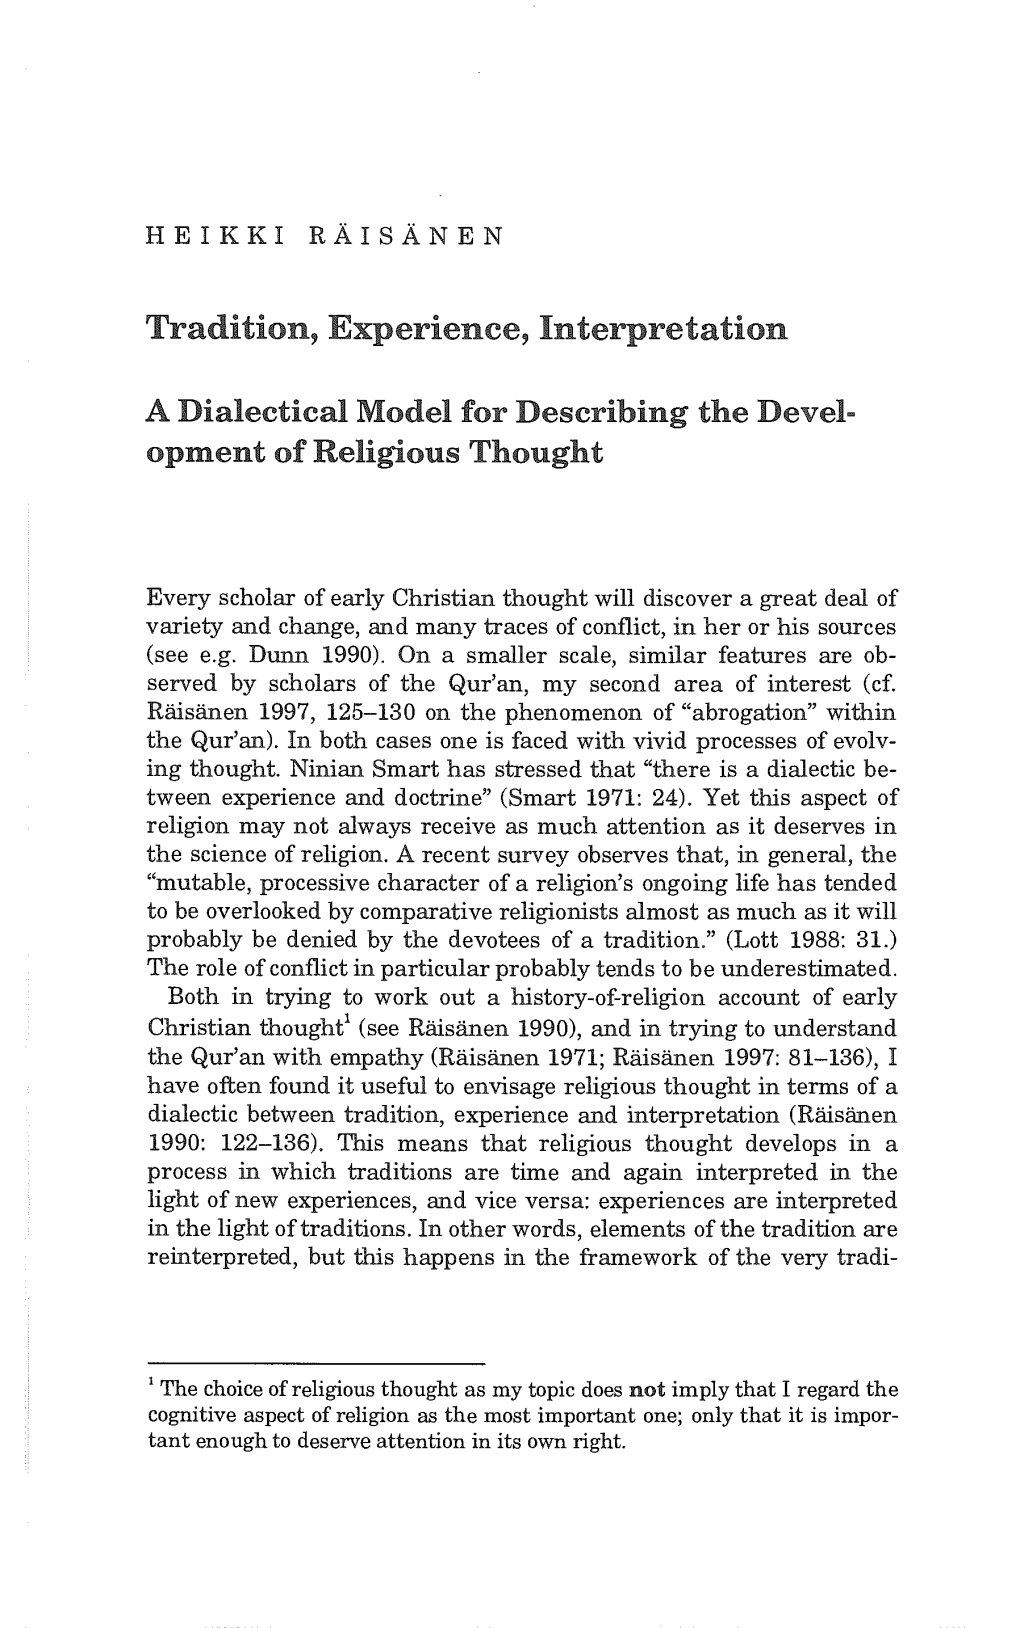 Tradition, Experience, Interpretation a Dialectical Model for Describing The